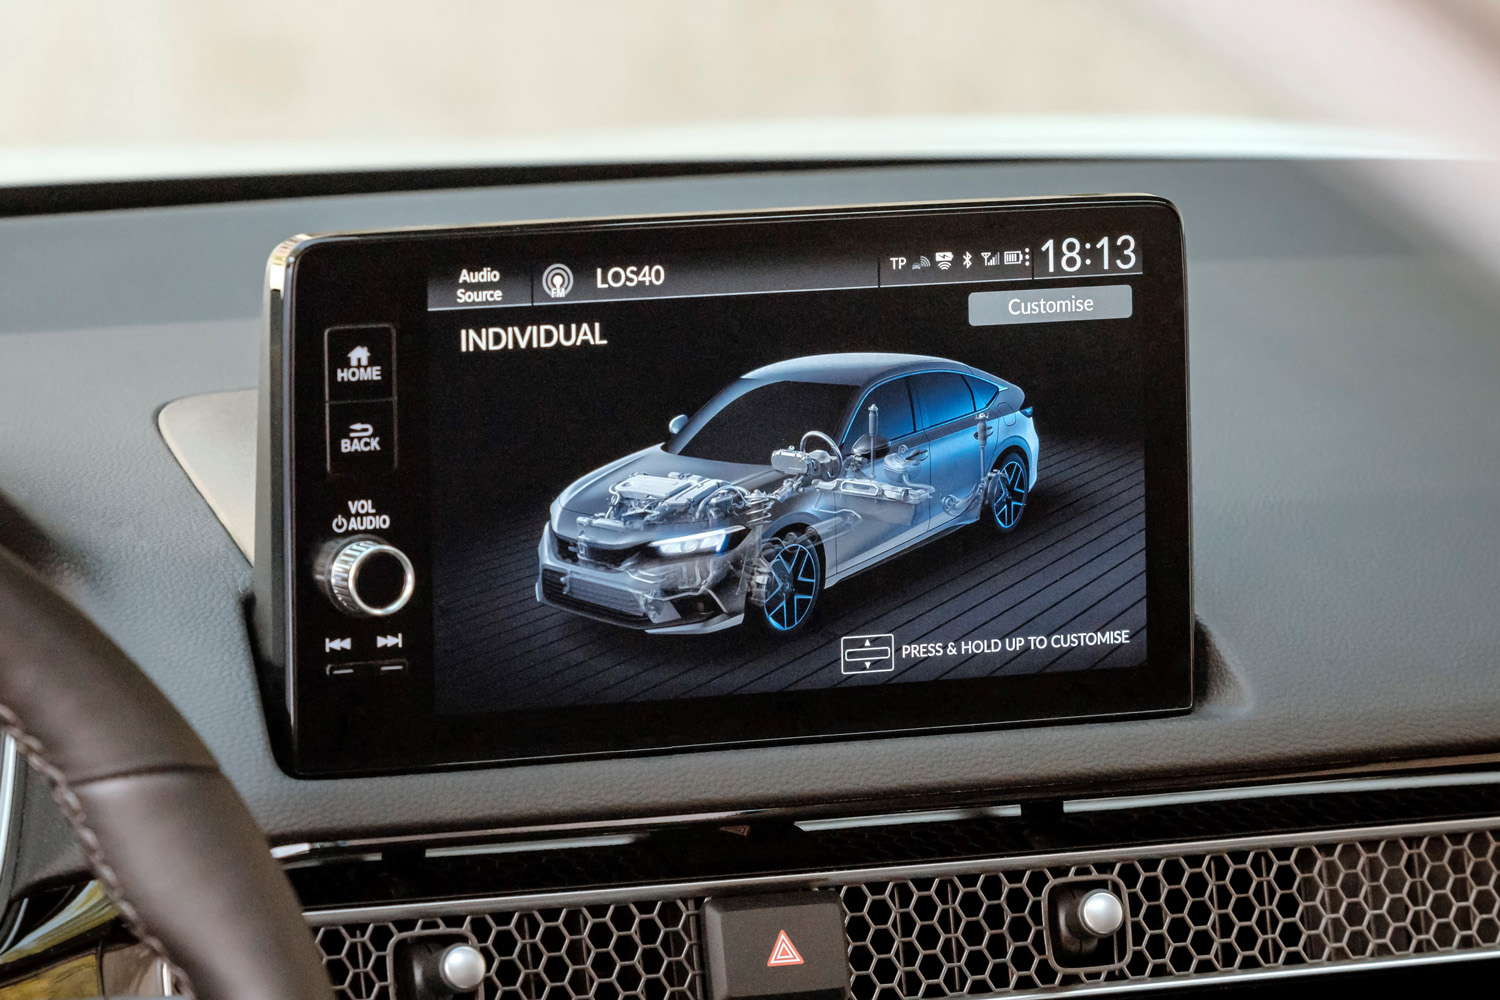 2022 Honda Civic e:HEVdrive mode screen on infotainment system